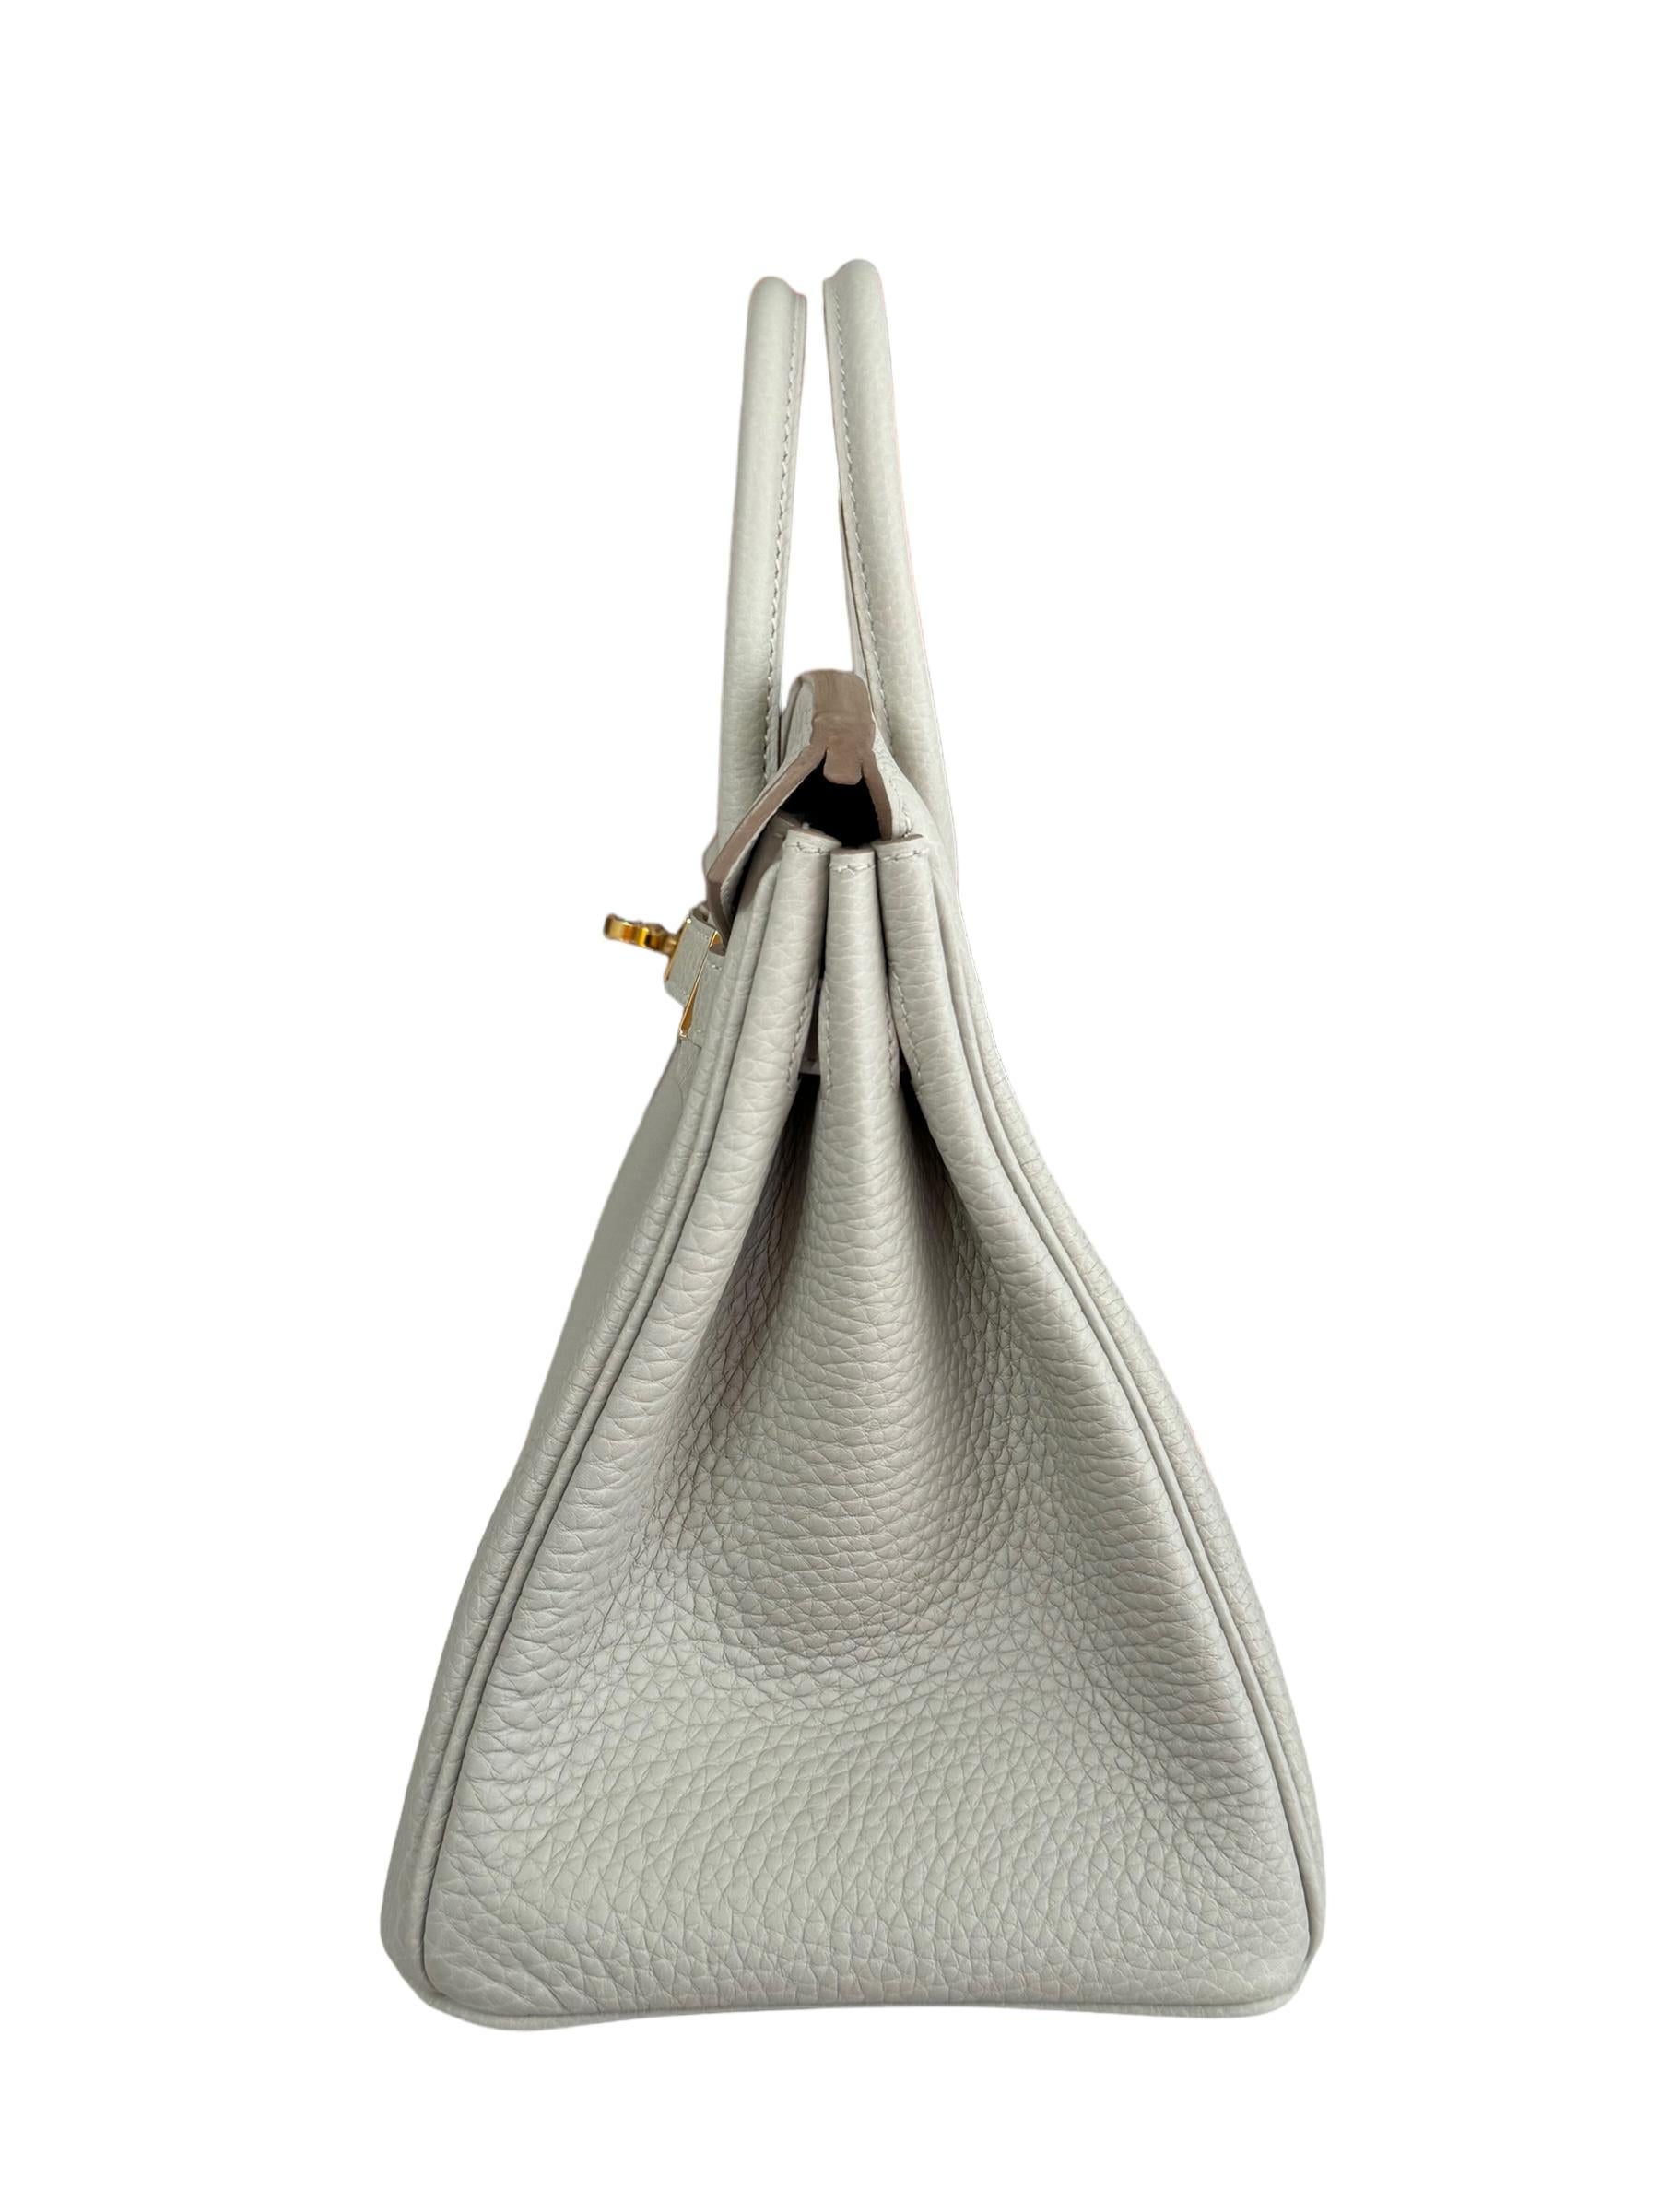 Hermes Birkin 25 Gris Perle Gray Togo Leather Handbag Gold Hardware NEW 2